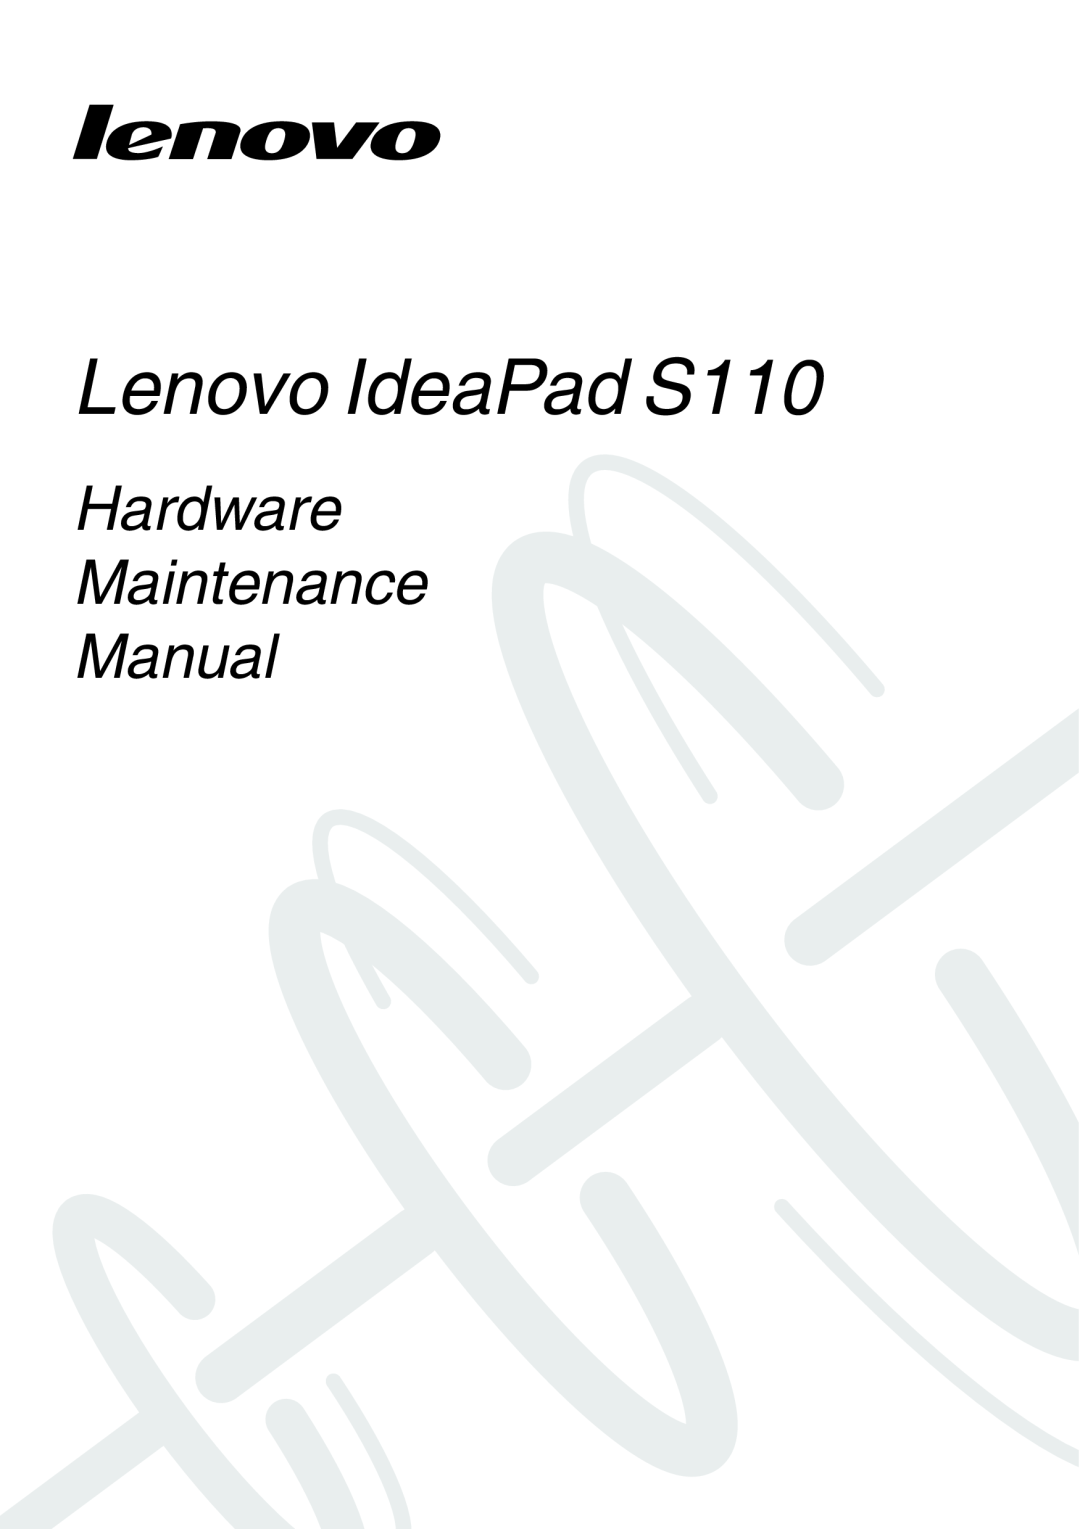 Lenovo manual Lenovo IdeaPad S110, User Guide 